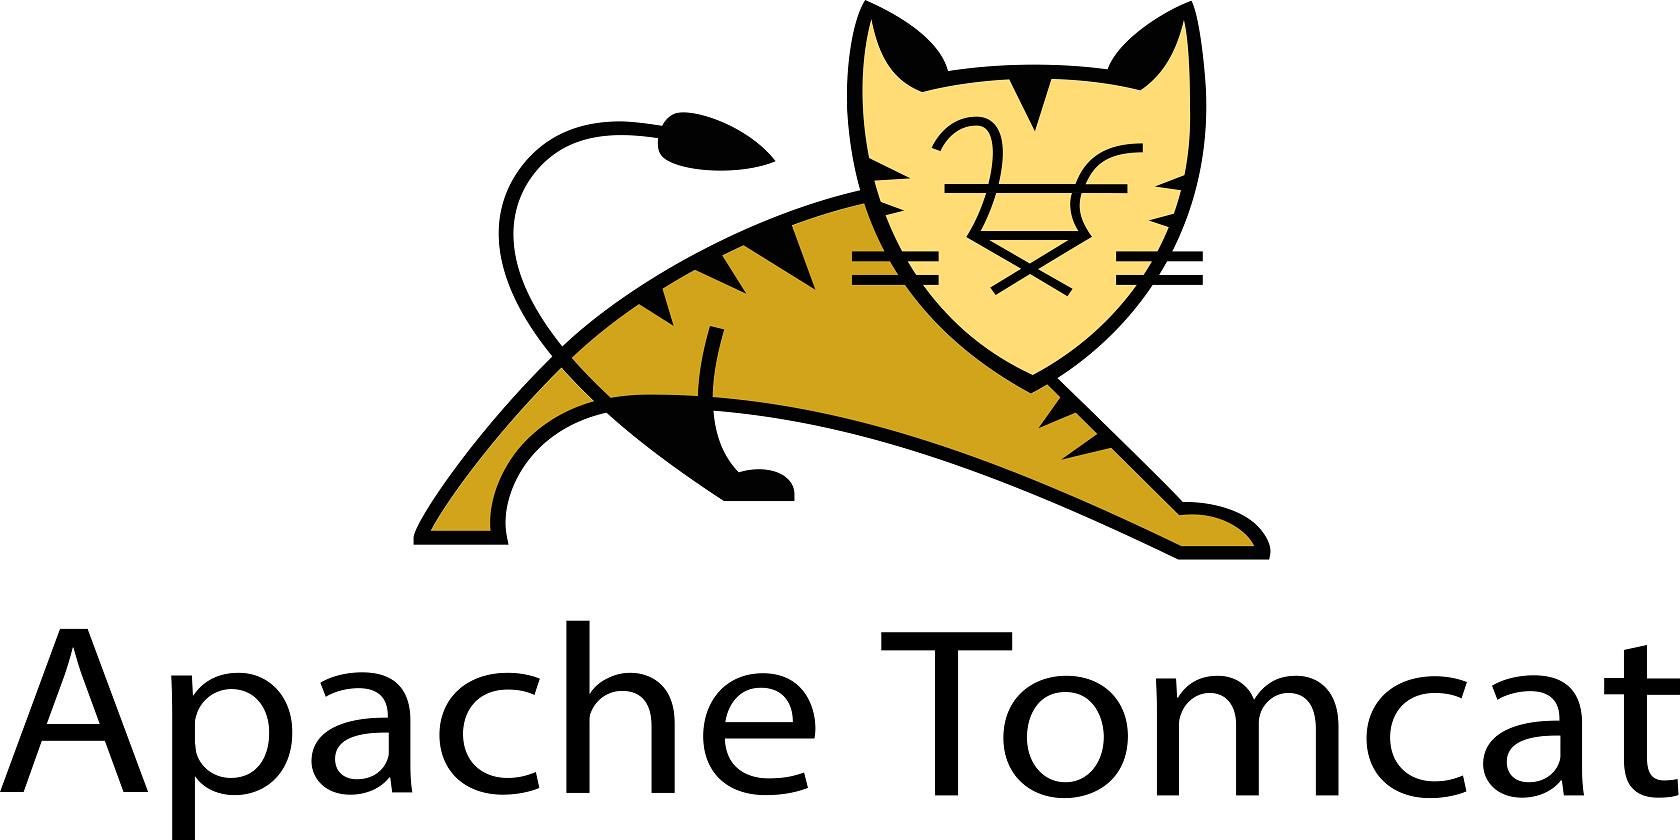 Apache_Tomcat_Logo